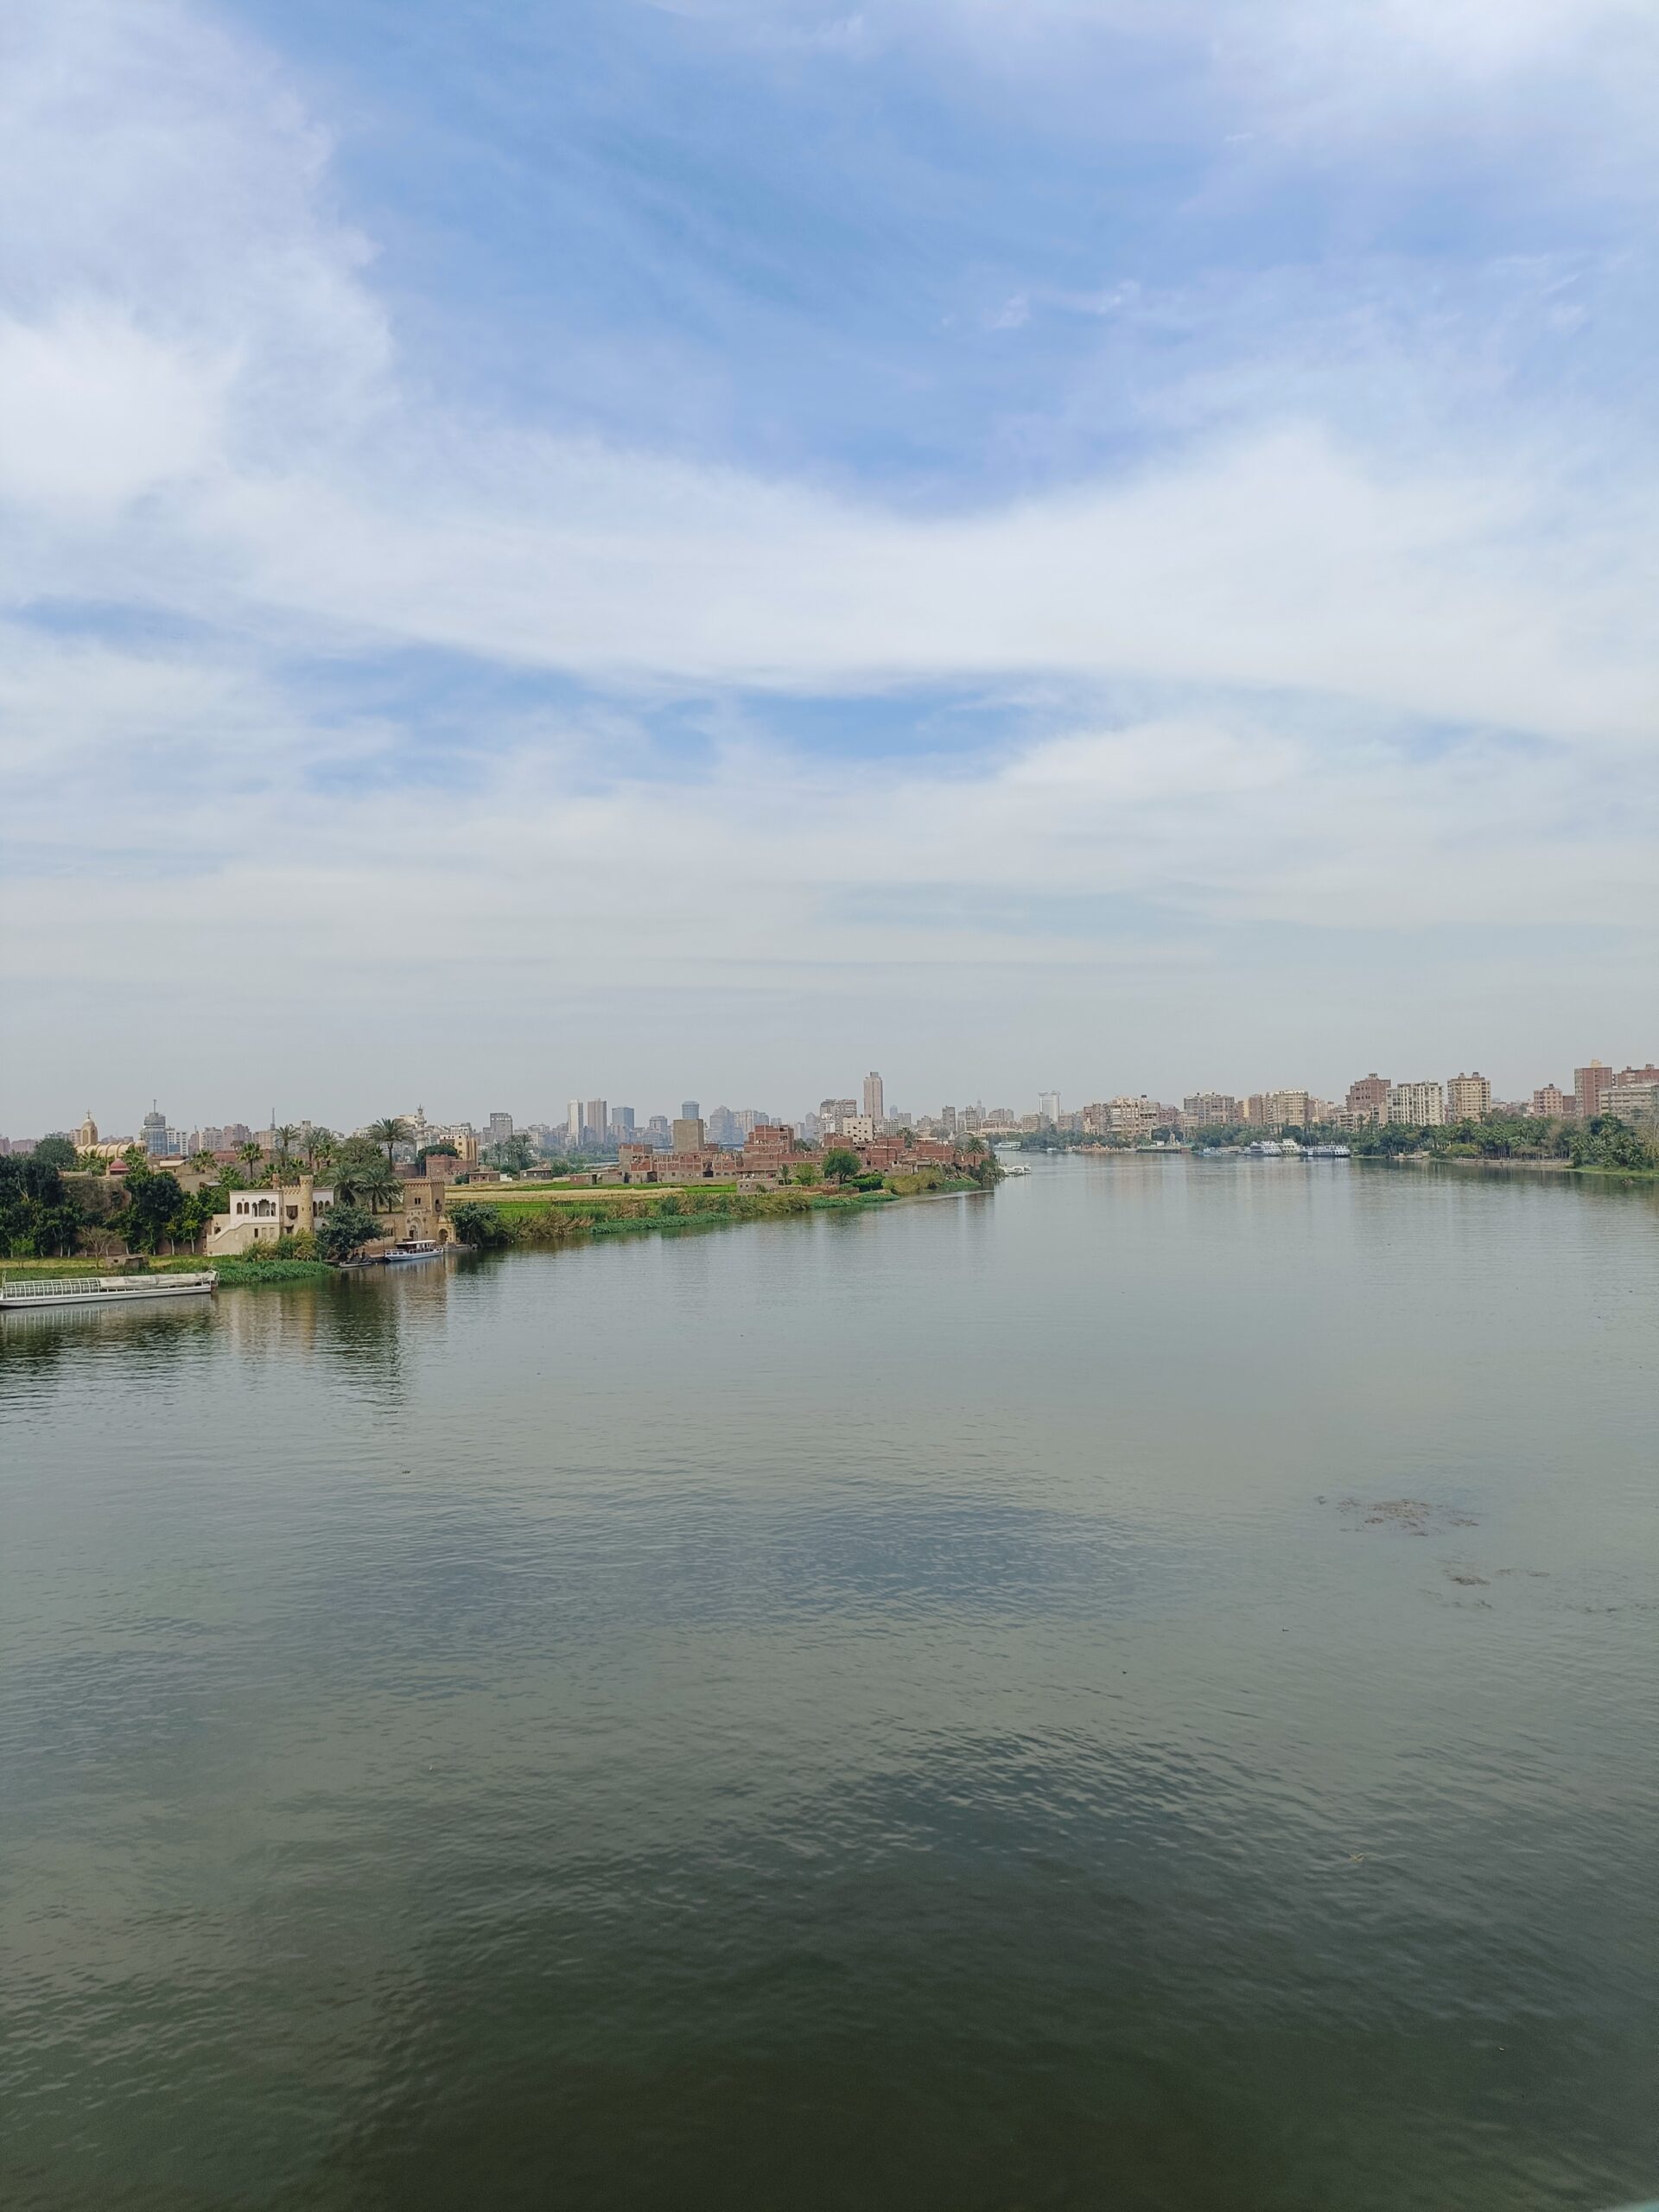 Nile river